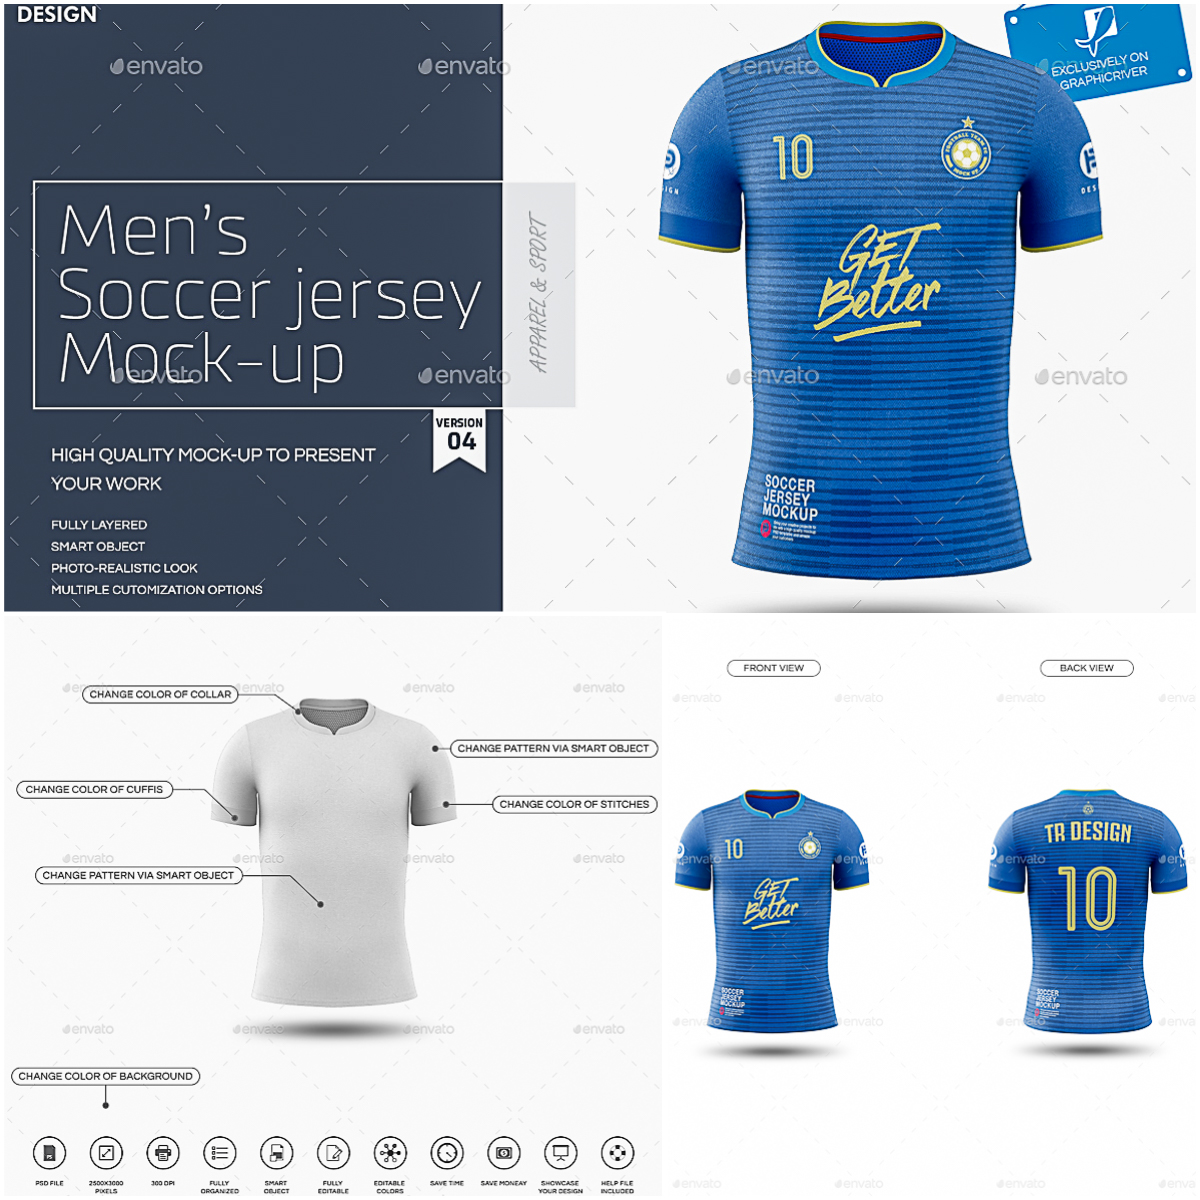 Men's Soccer Jersey Mockup | Free download